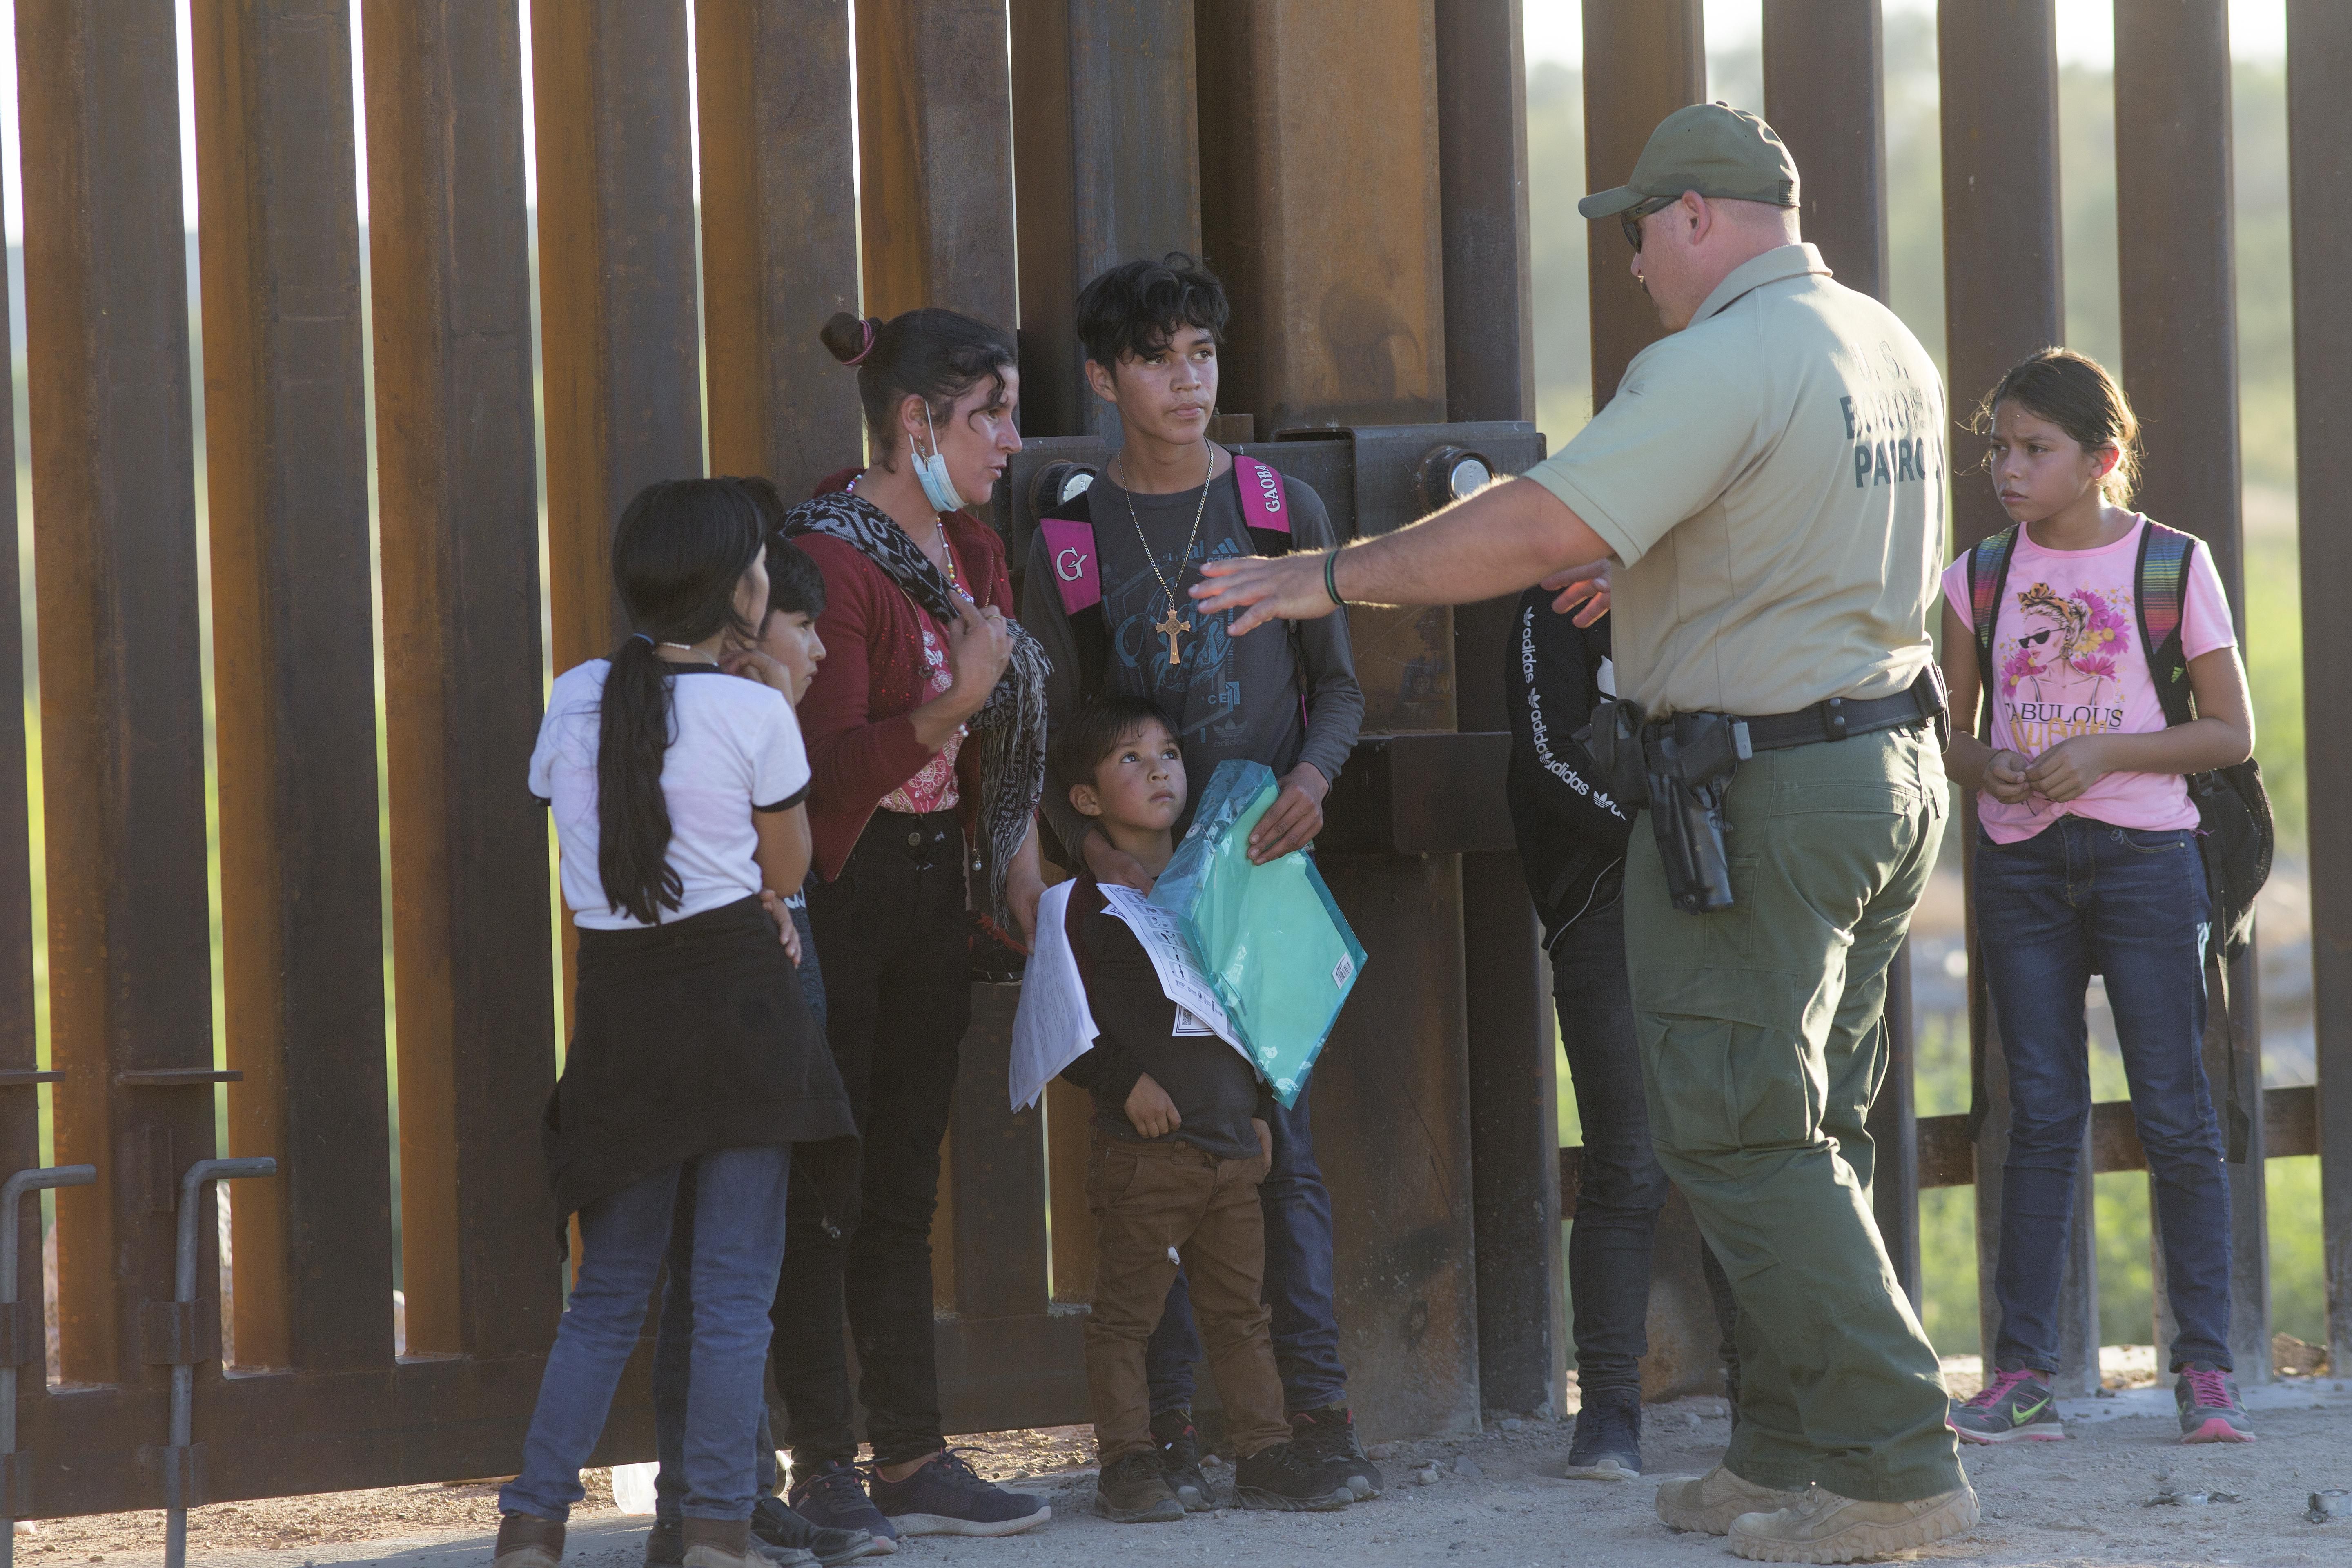 A U.S. border agent detains asylum seekers